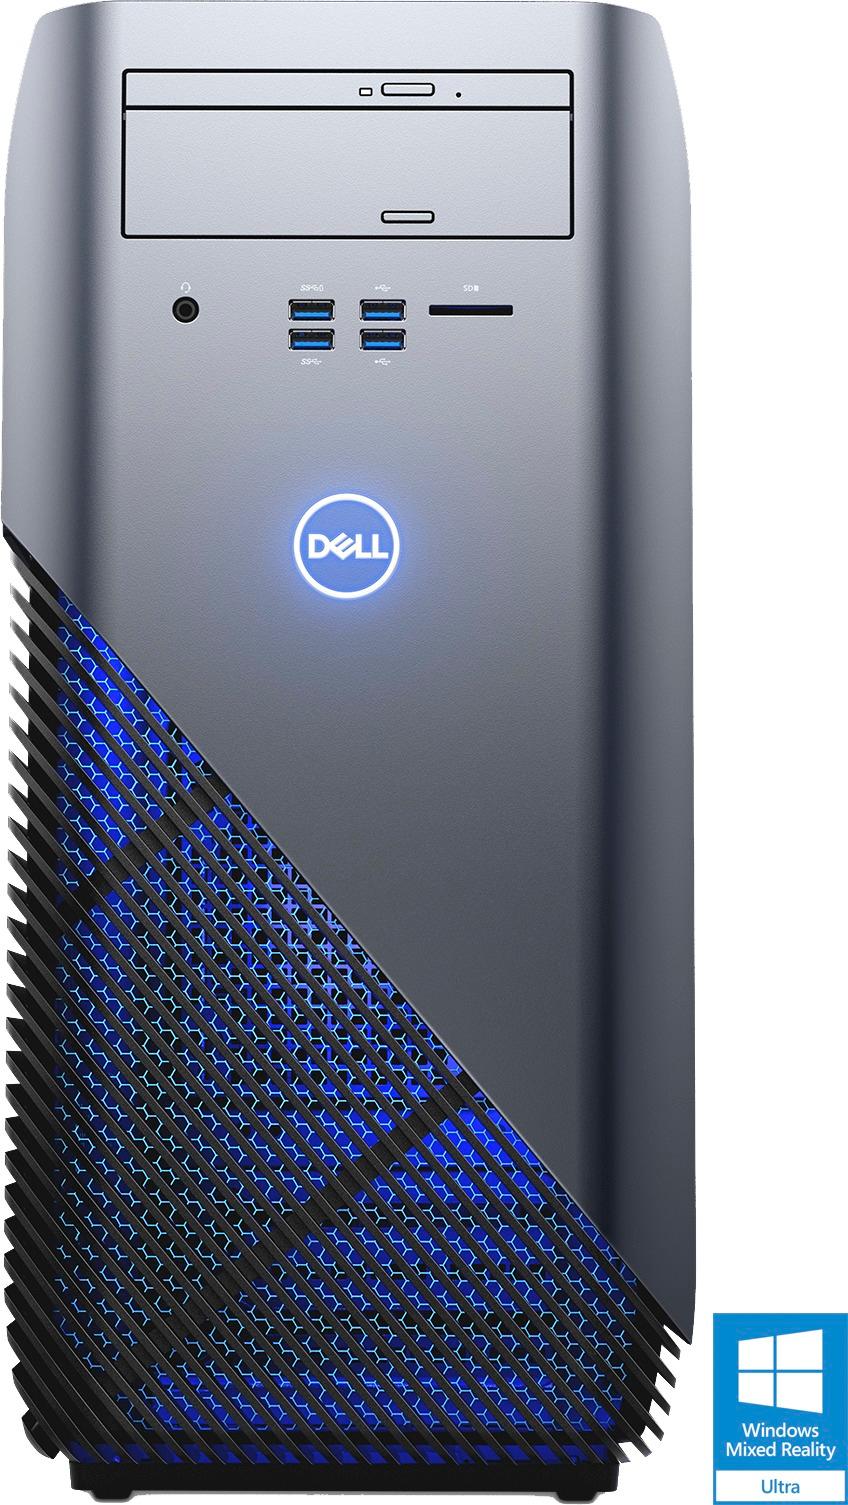 Dell - Inspiron Desktop - AMD Ryzen 5 1400 - 8GB Memory - AMD Radeon RX 570 - 1TB Hard Drive - Recon Blue